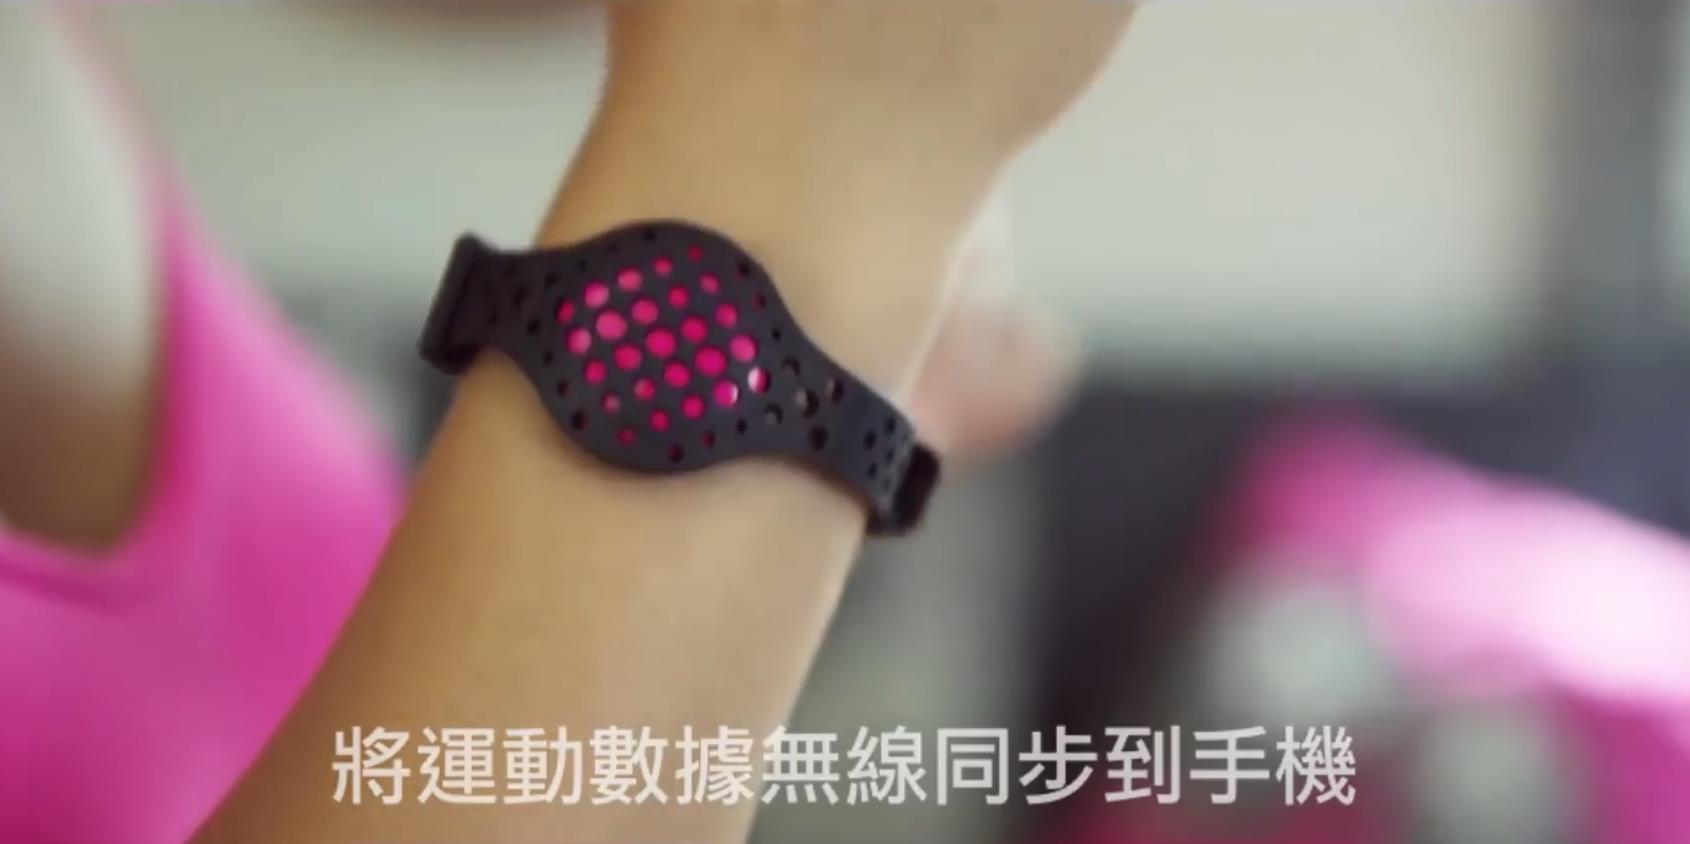 moov now中文广告 最先进的智能手环广告.mp4